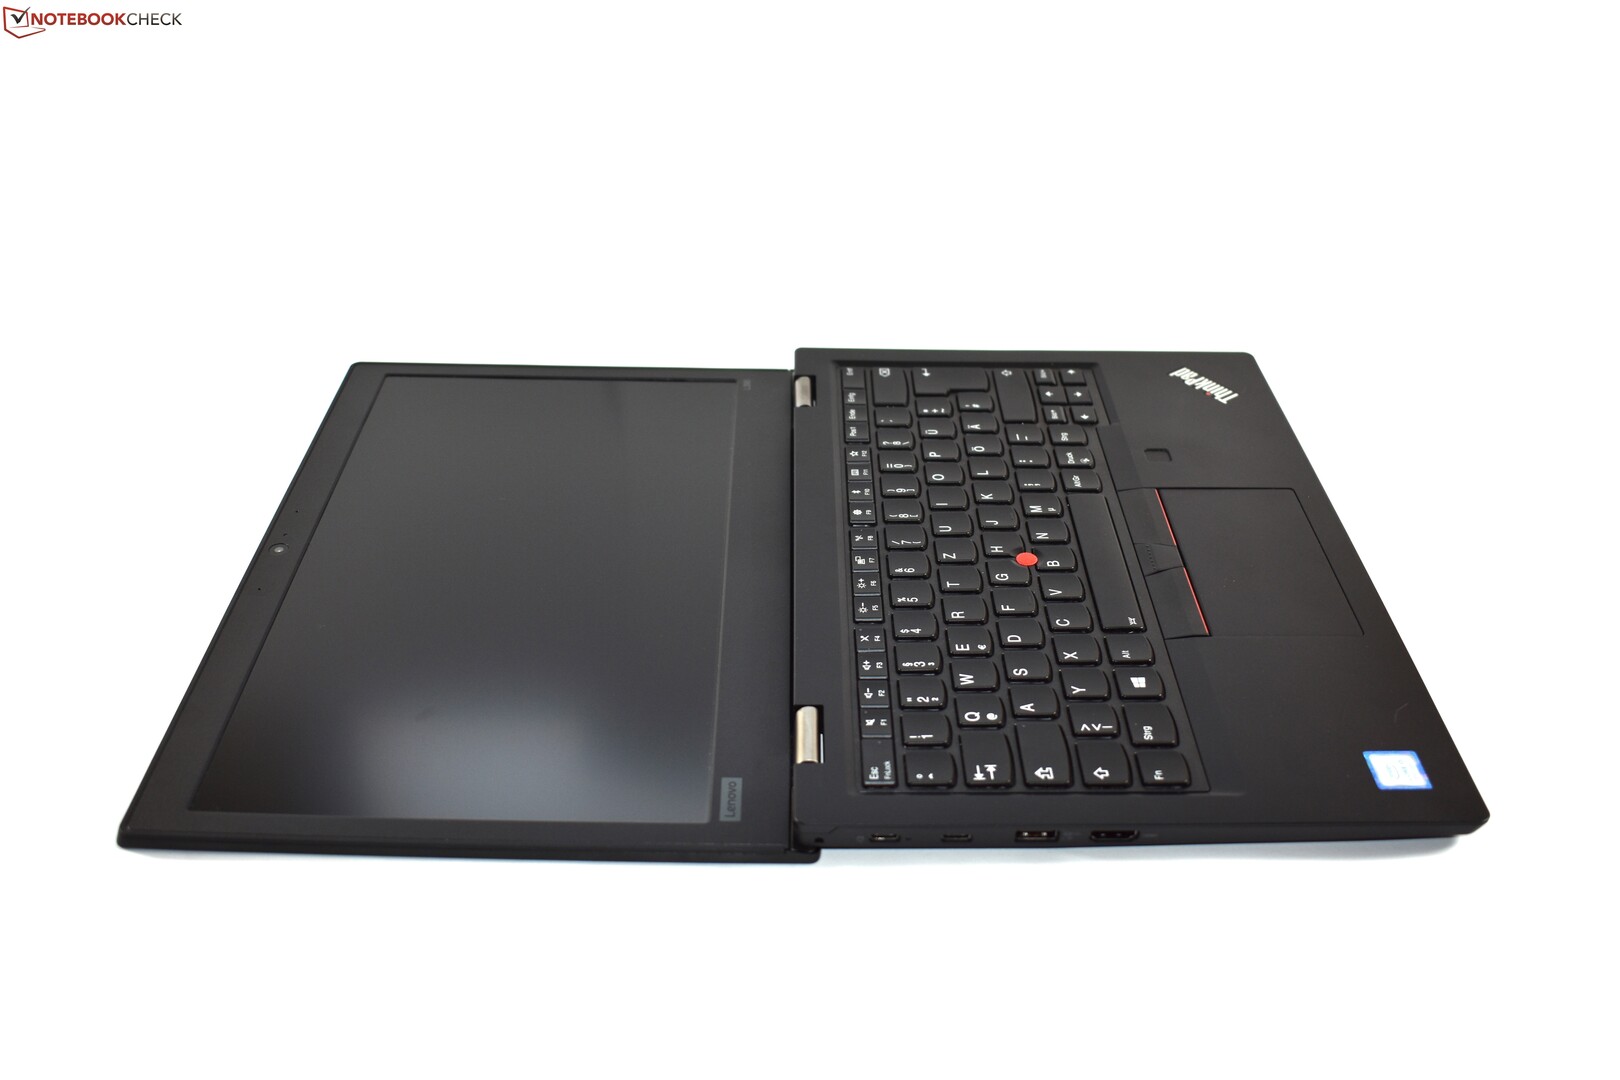 Lenovo ThinkPad L390 (i5-8265U, FHD) Laptop Review - NotebookCheck.net